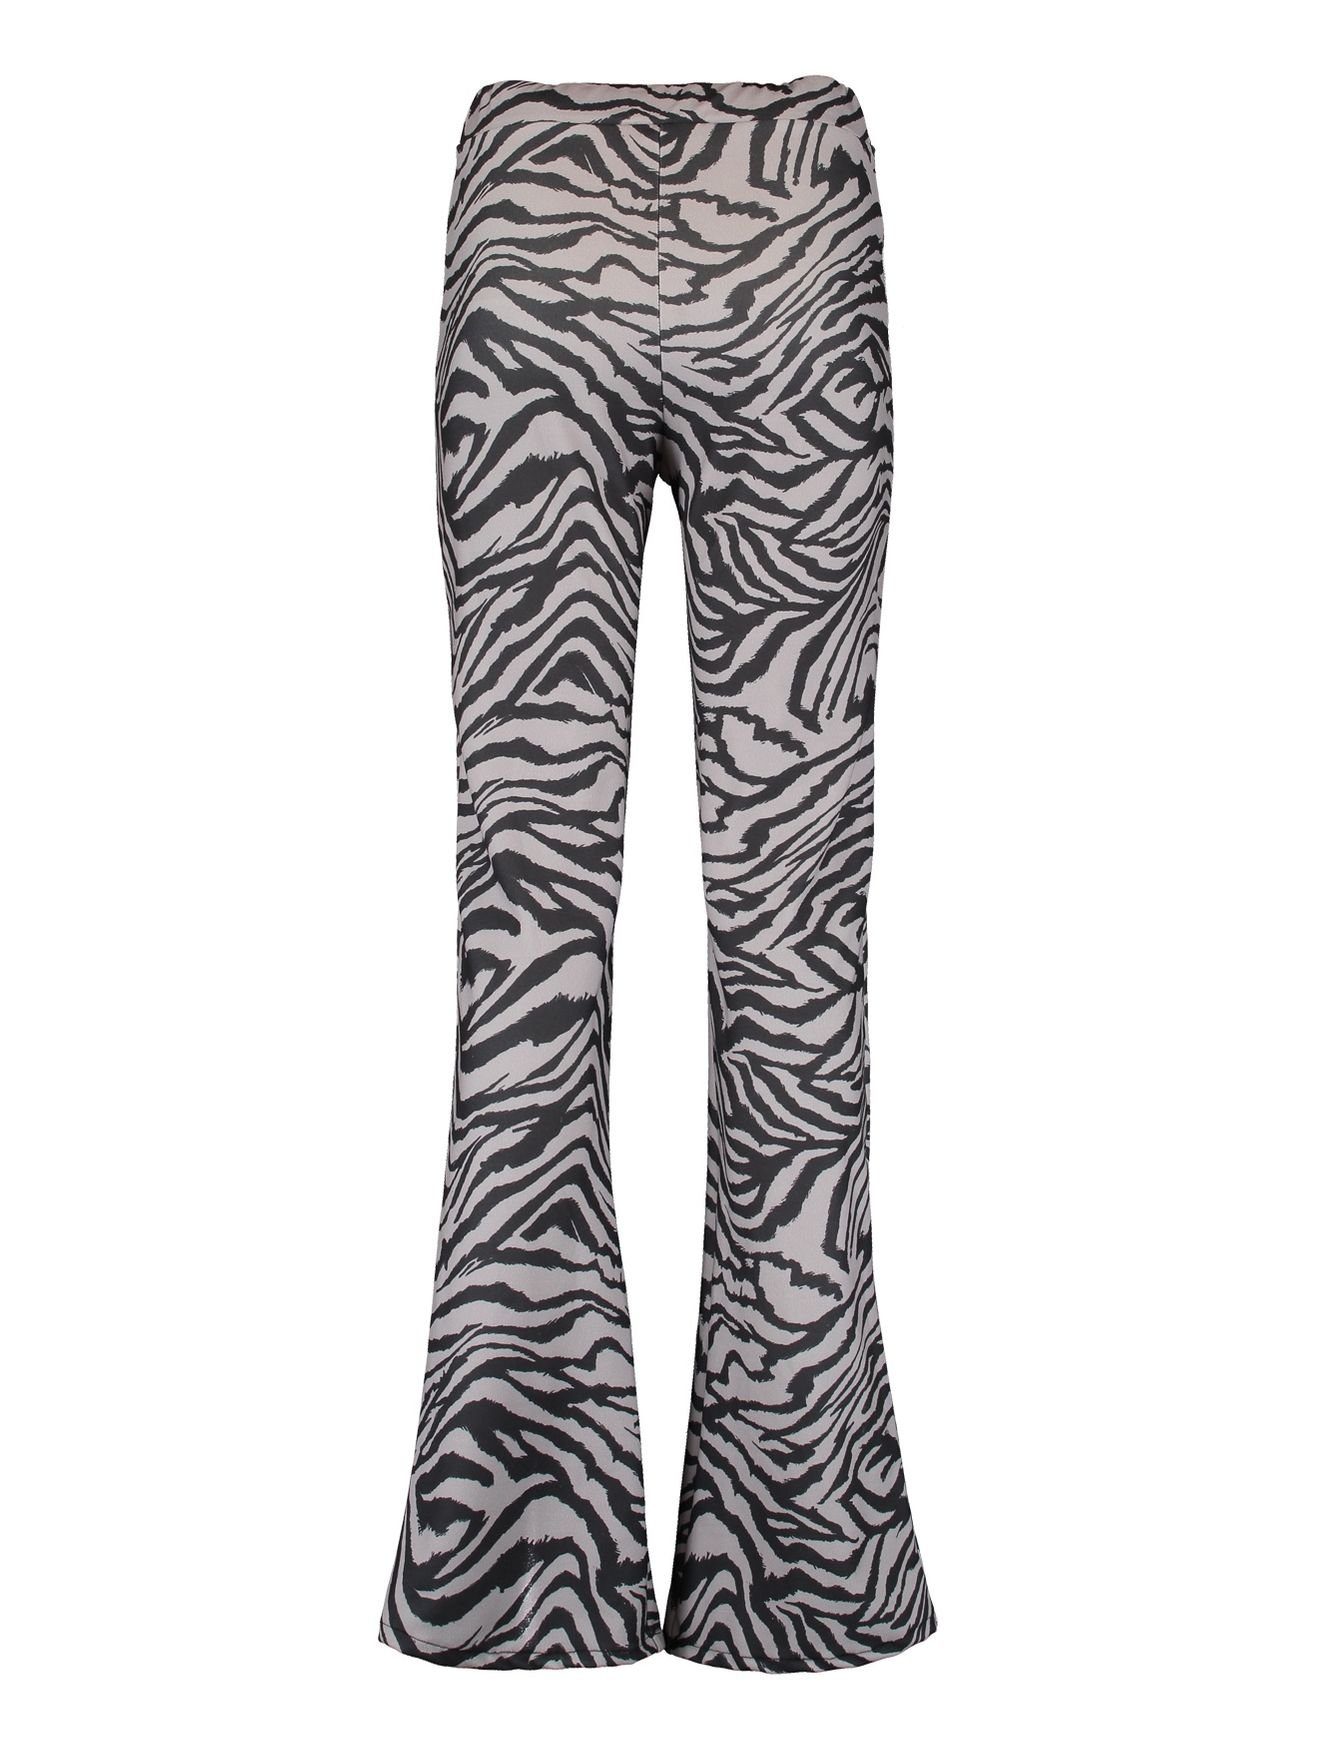 HaILY\'S Stoffhose Flared Bootcut Leggings Stoff Hose Zebra Animal Print  Sinka 5073 in Grau